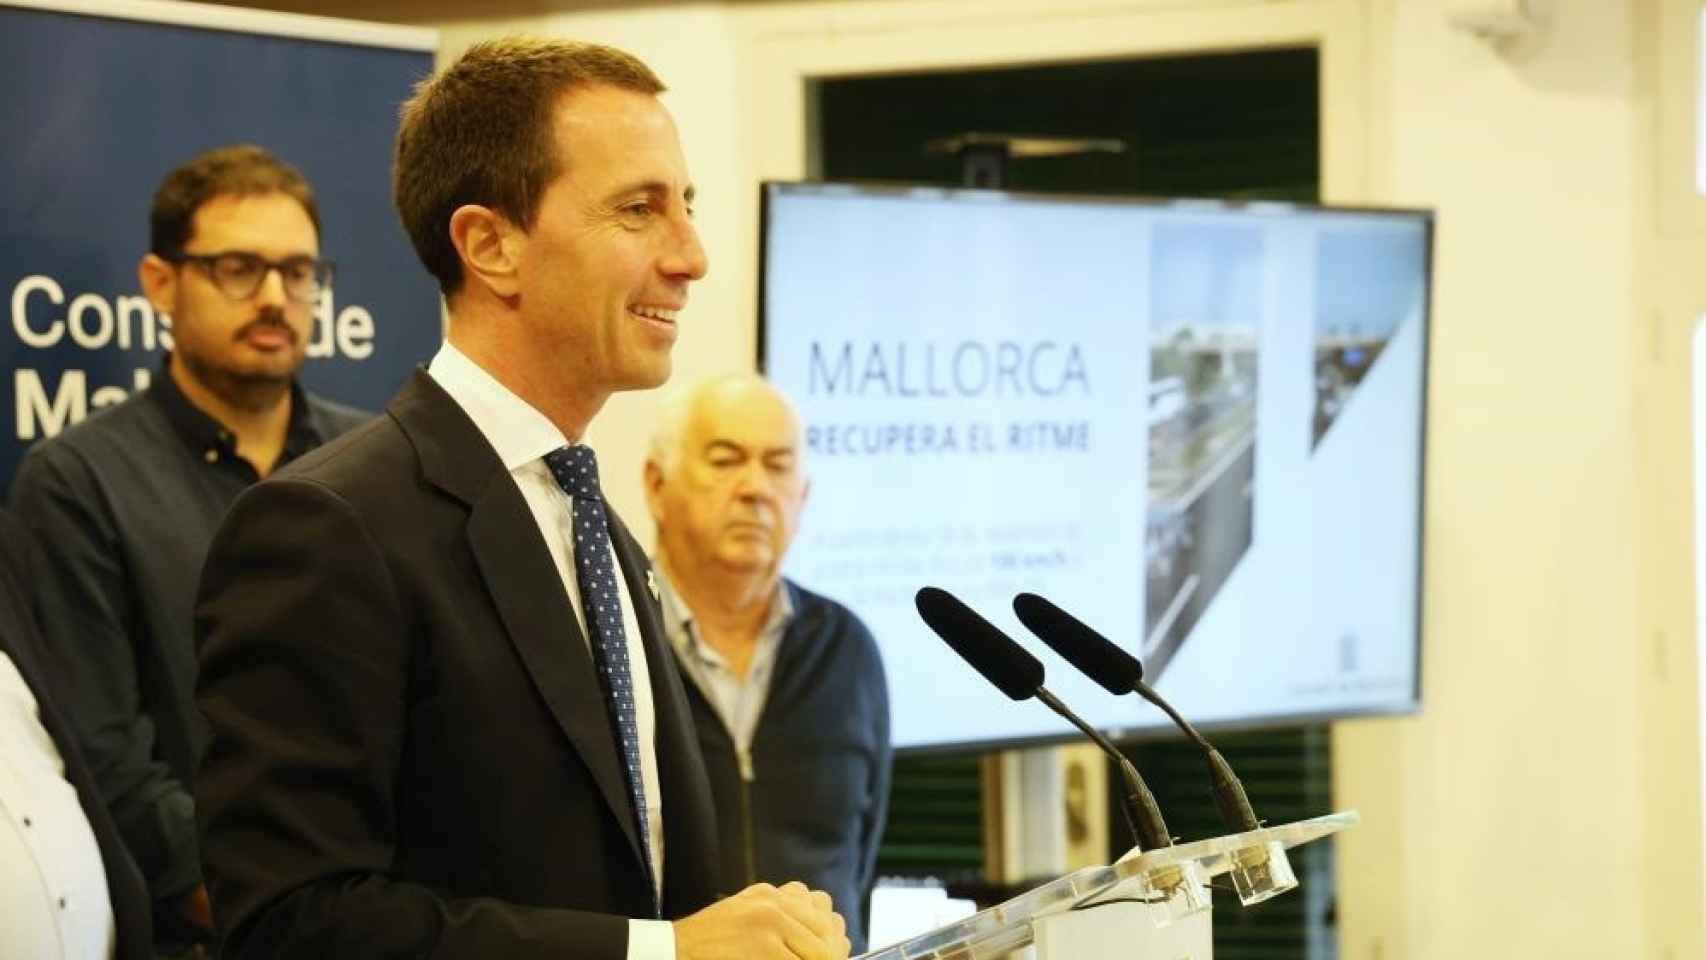 El presidente del Consell de Mallorca, Llorenç Galmés, en rueda de prensa